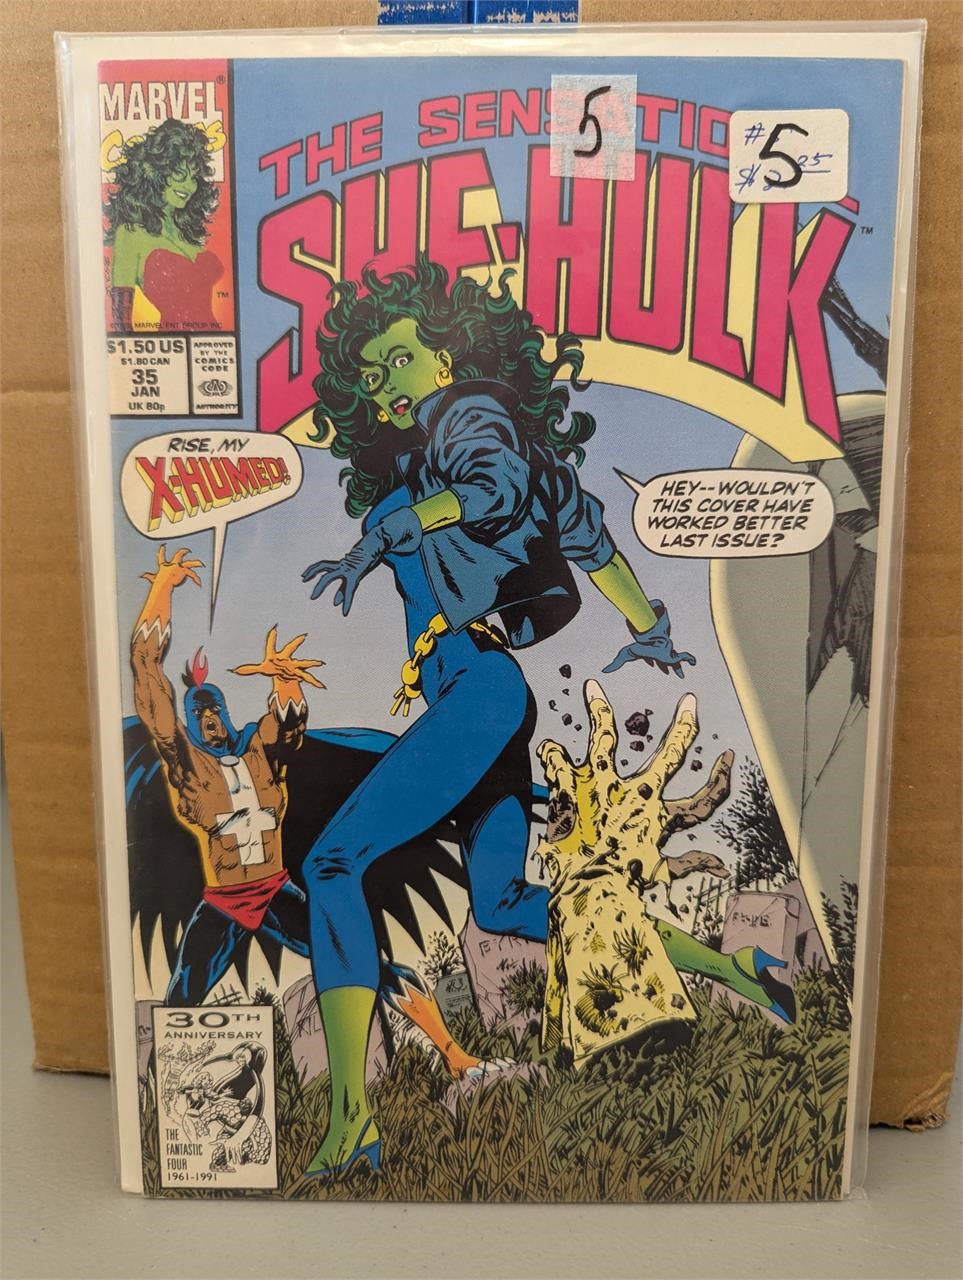 The Sensational She-Hulk, Vol. 1 #35 (1991)